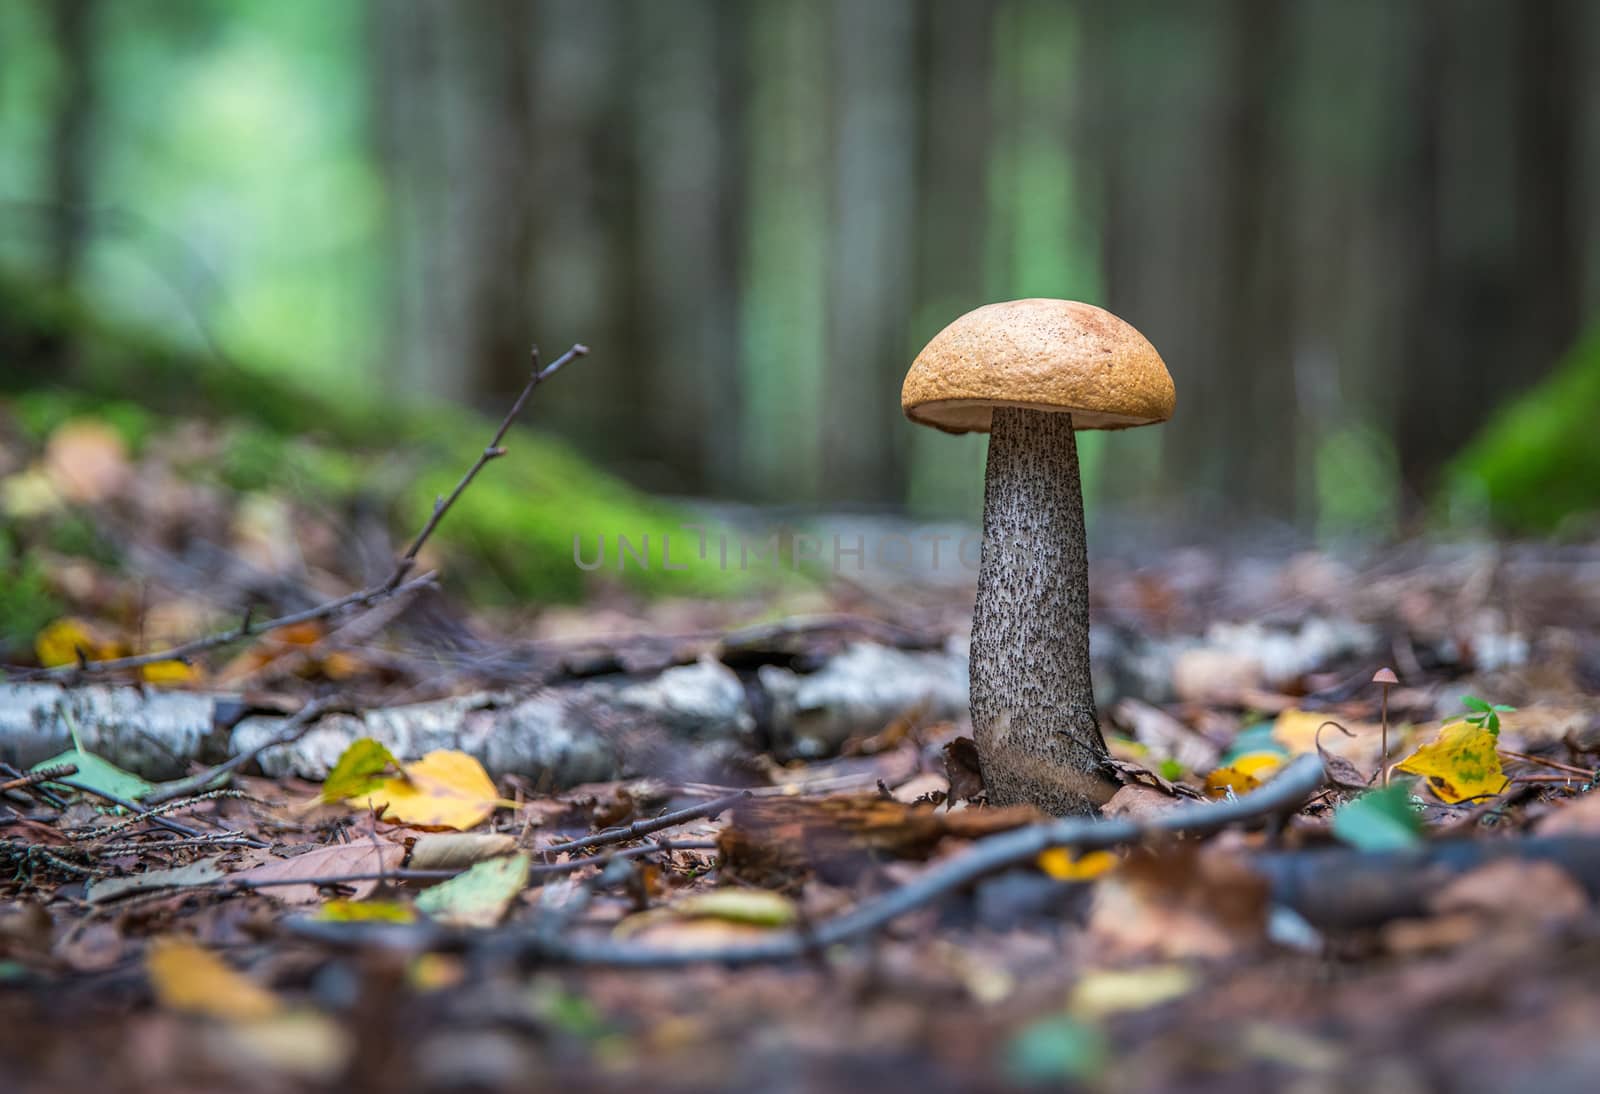 Amazing edible mushroom boletus edulis with blurred background in forest. by bhavik_jagani